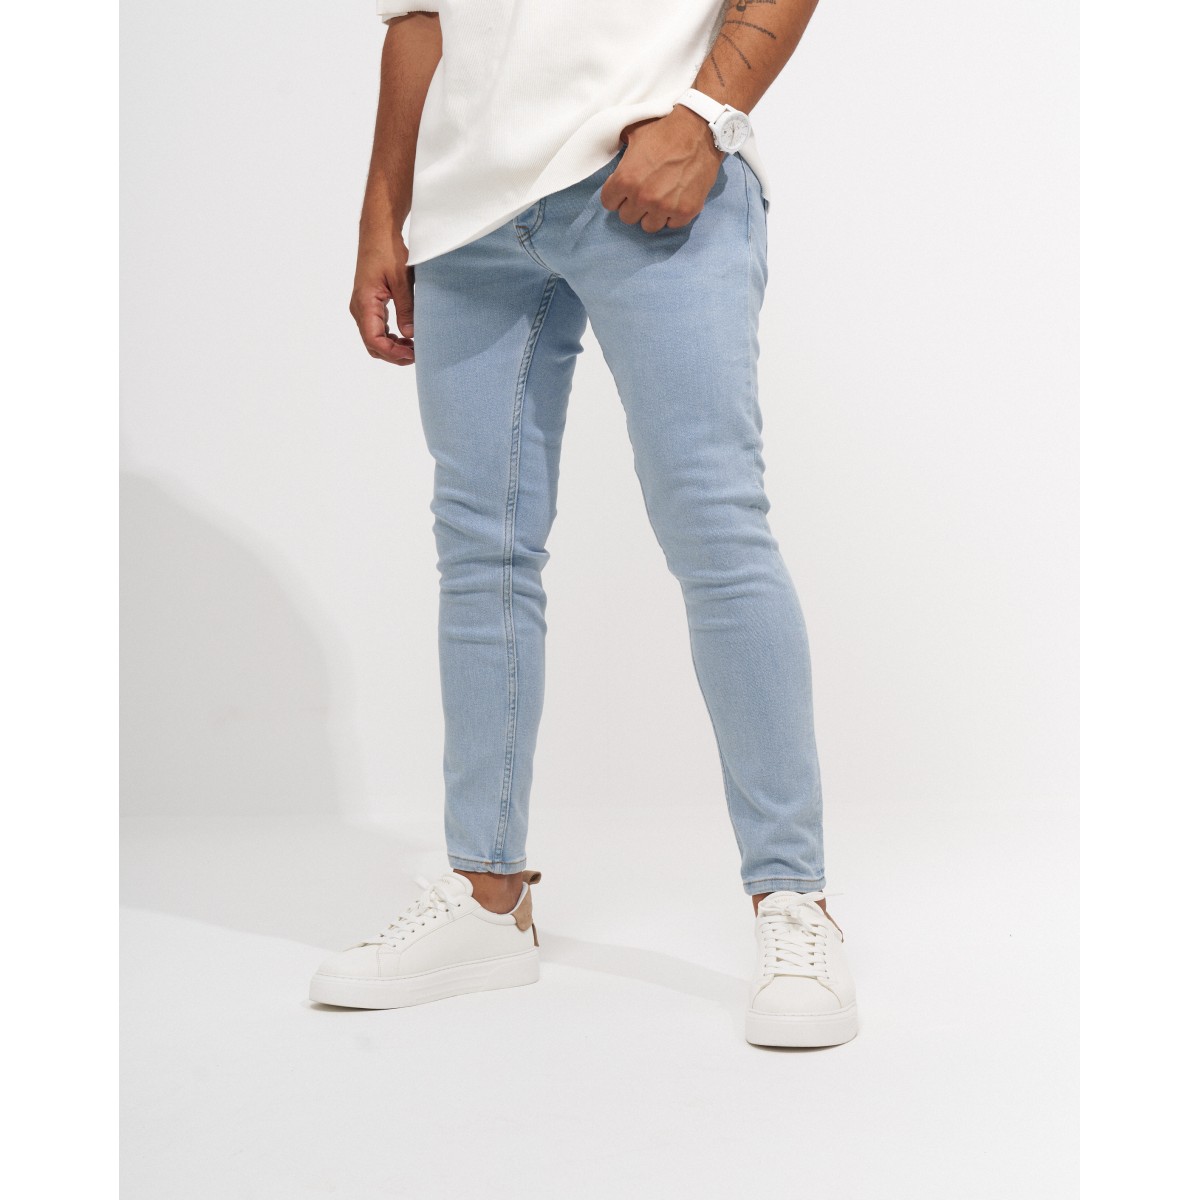 Bershka Skinny Fit Denim Jeans Jacket Size M #C415 | eBay